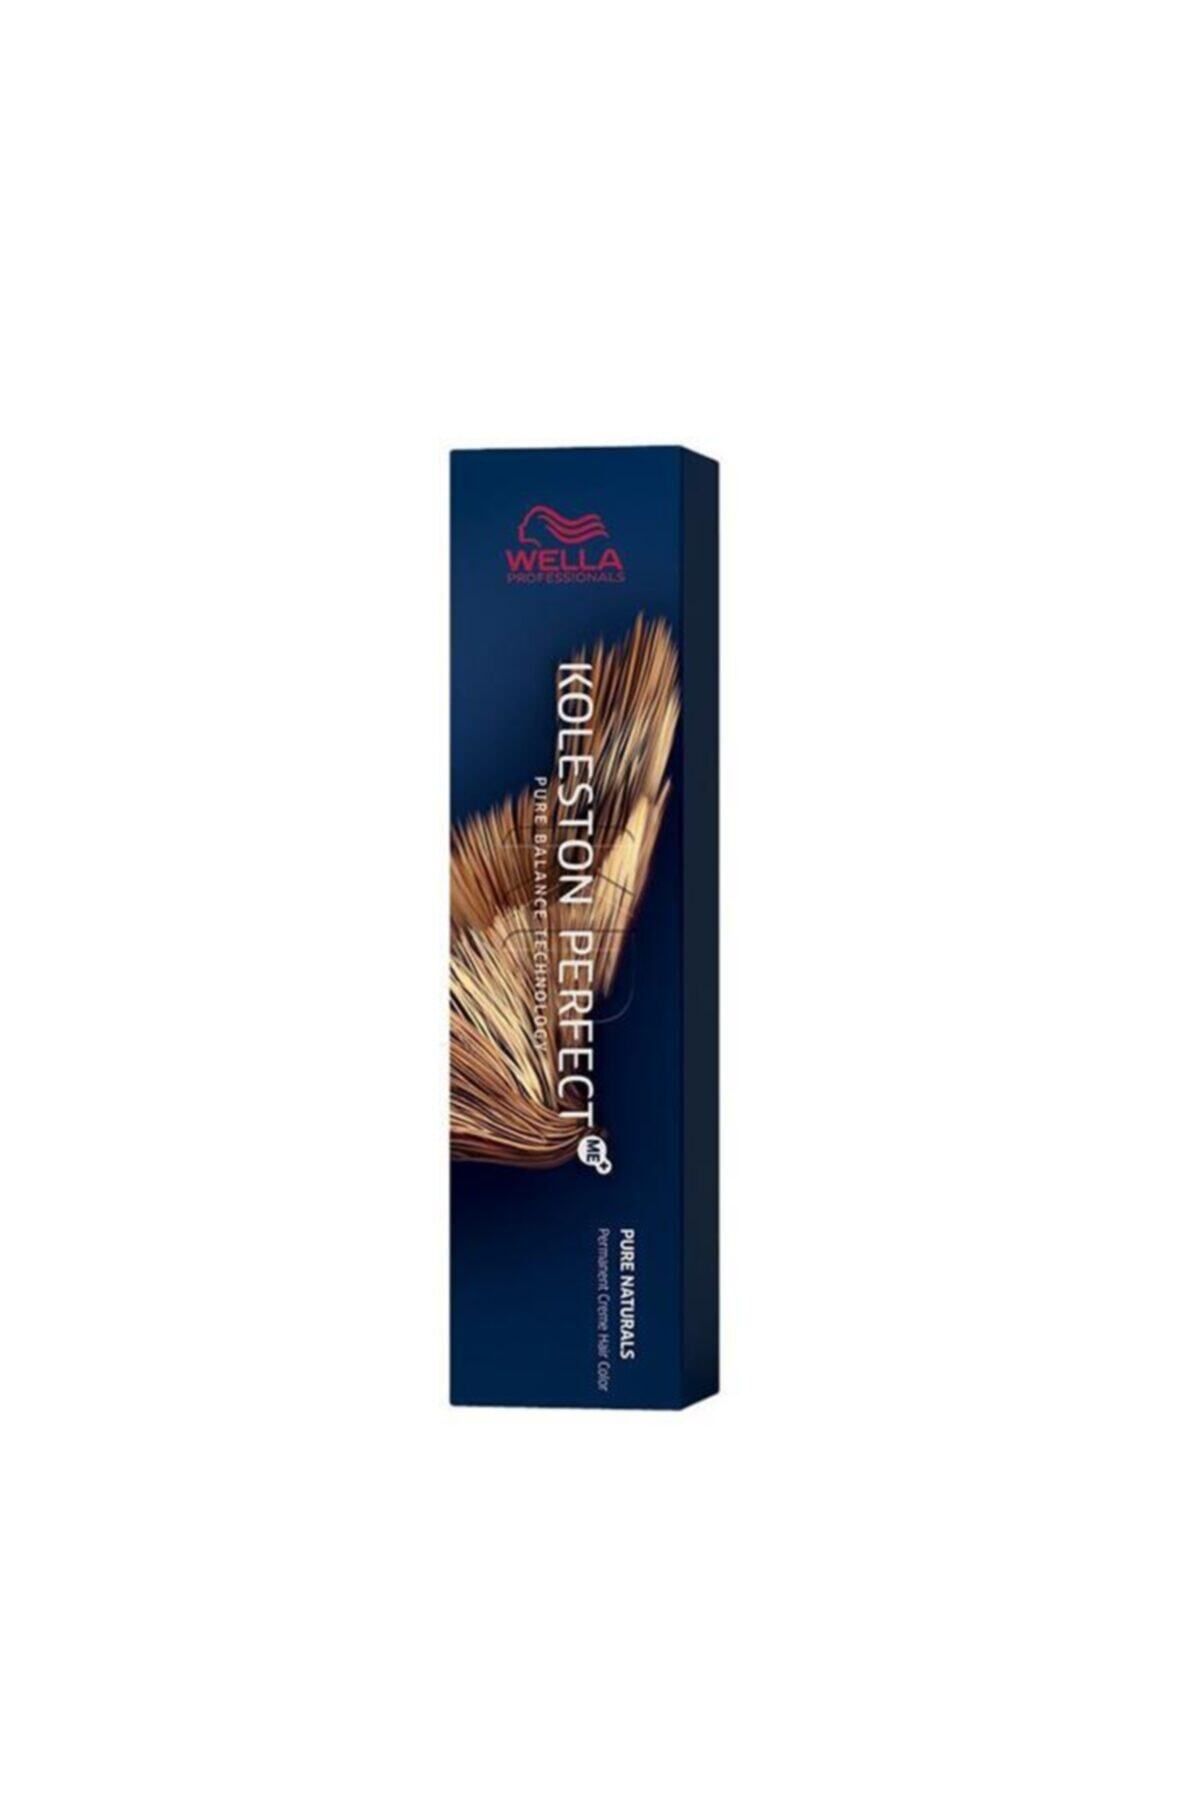 Wella Hair Dye - Koleston Perfect 6.1 Dark Auburn Ash MADELUİE387